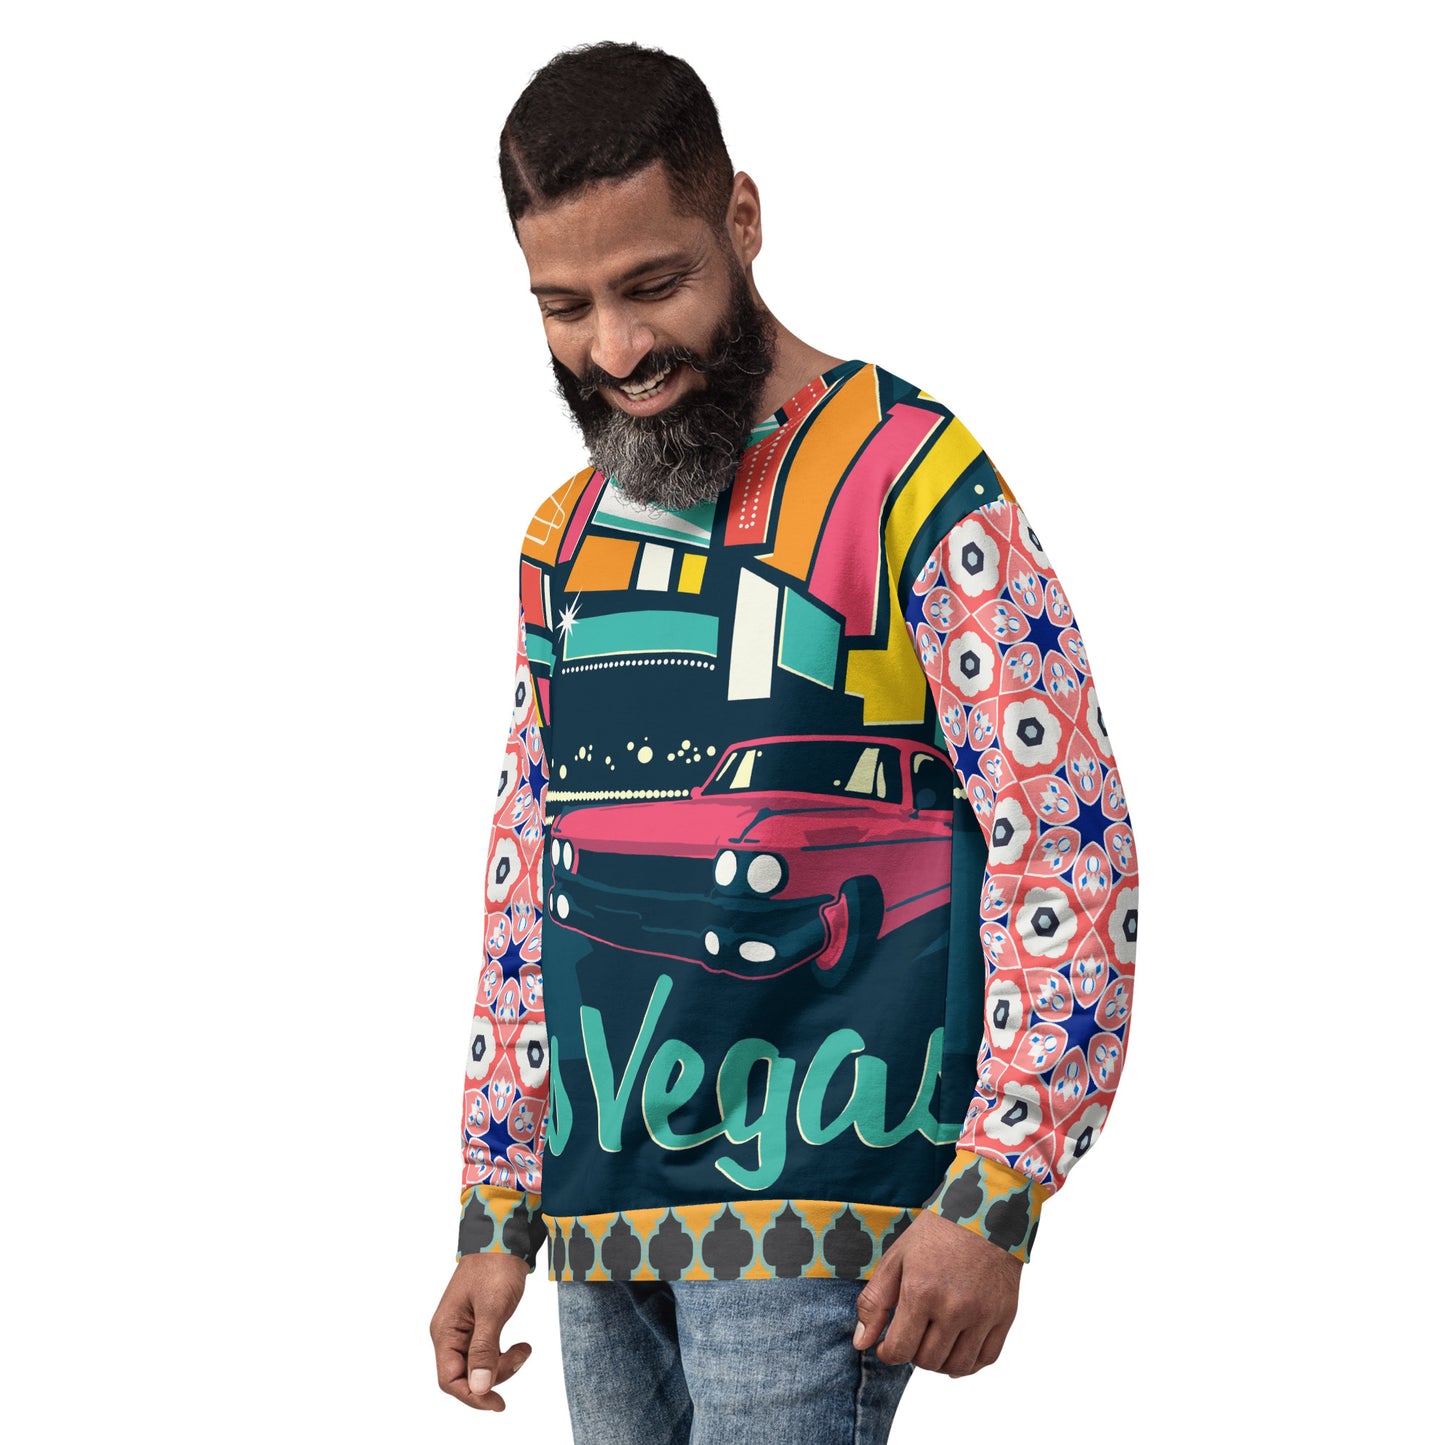 Las Vegas Cool Sweatshirt